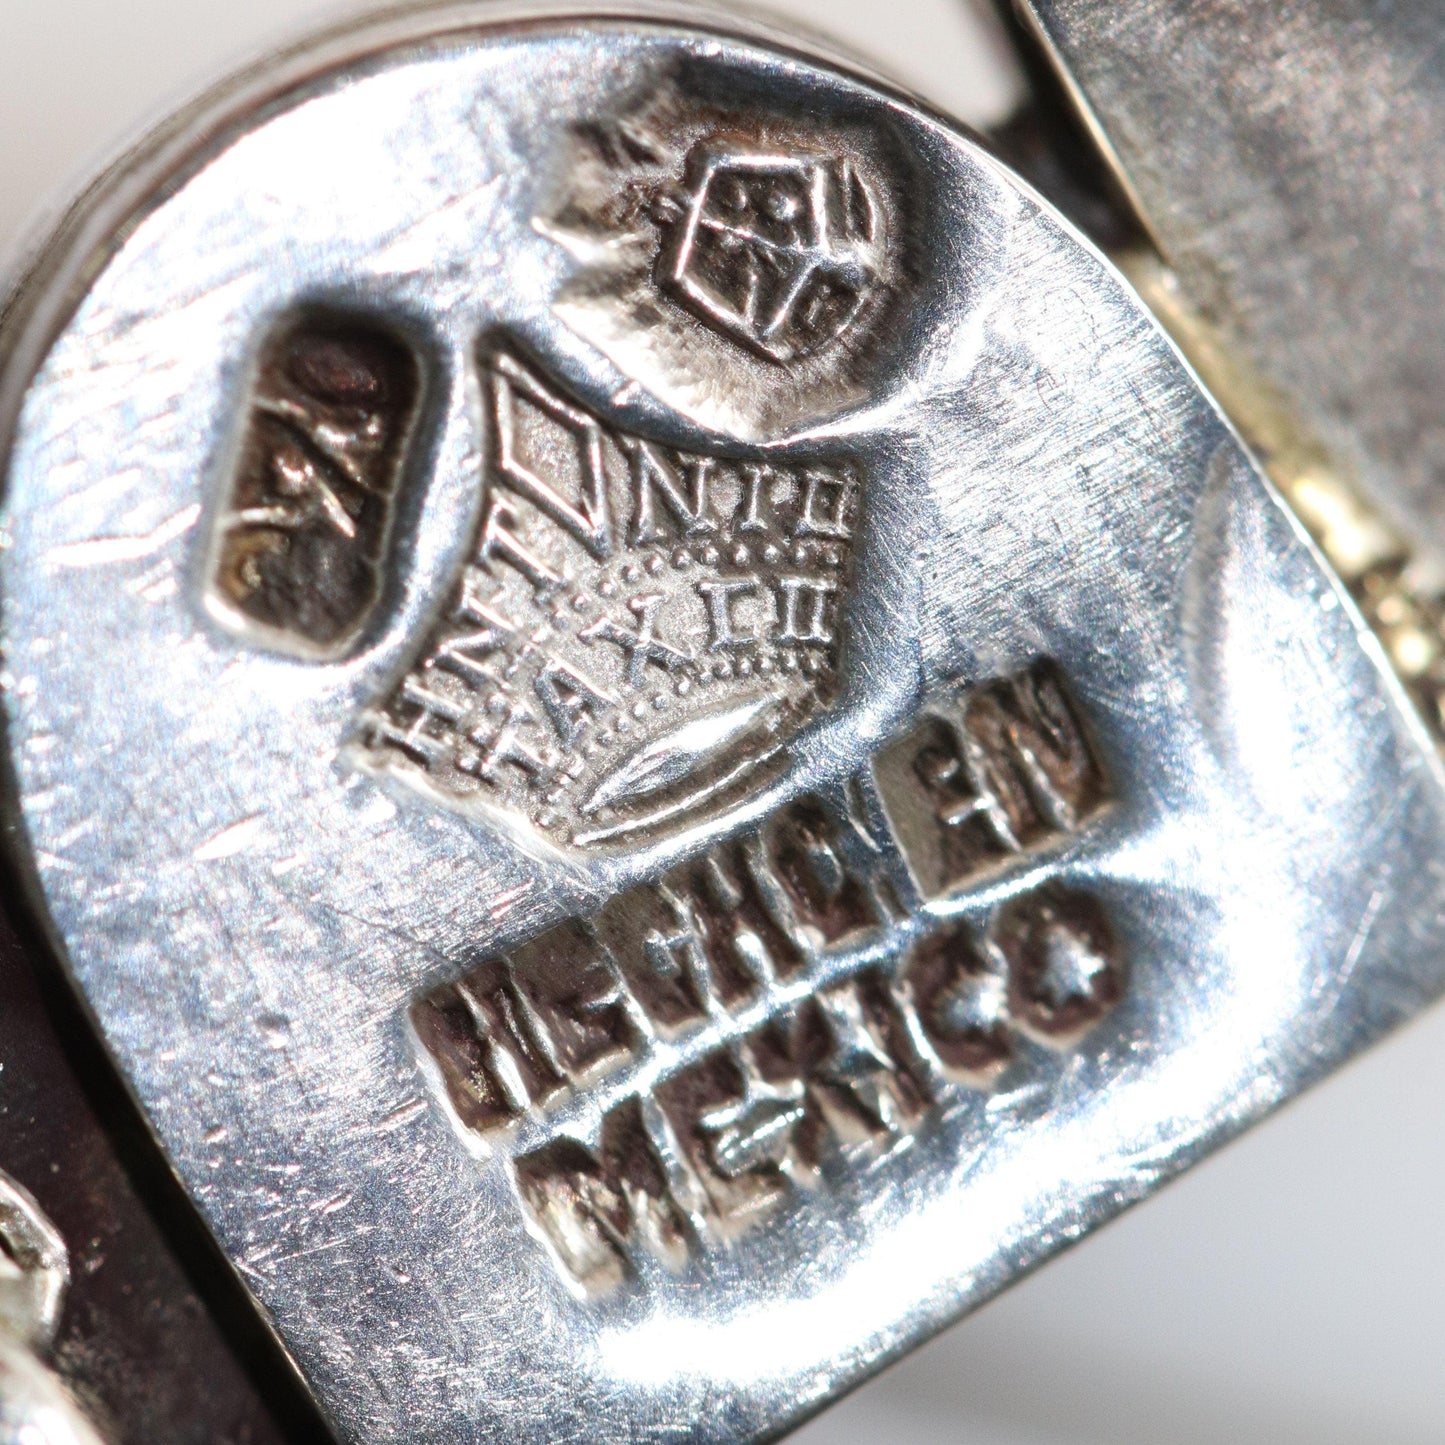 Antonio Pineda Bracelet | Taxco Mid-Century Modernist Horseshoe-Link Onyx | Vintage 970 Sterling Silver Mexico - Carmel Fine Silver Jewelry